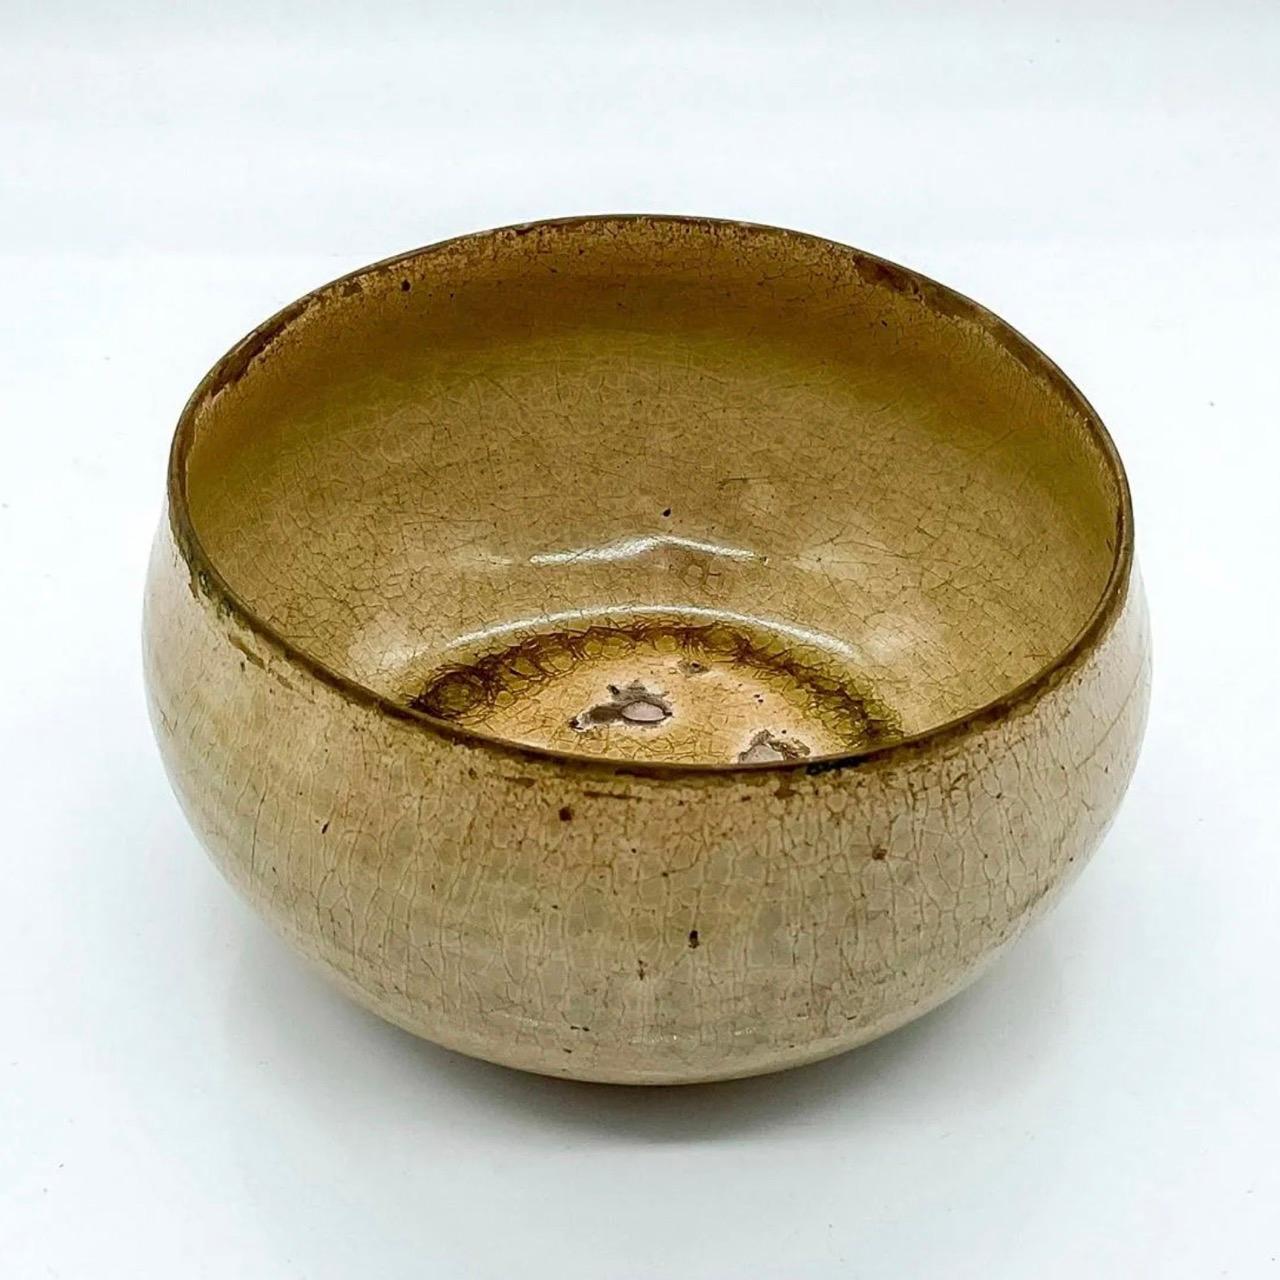 Han Antique Chinese Ceramic Celadon Bowl, Decorative Bowl with Patina, Wabi Sabi